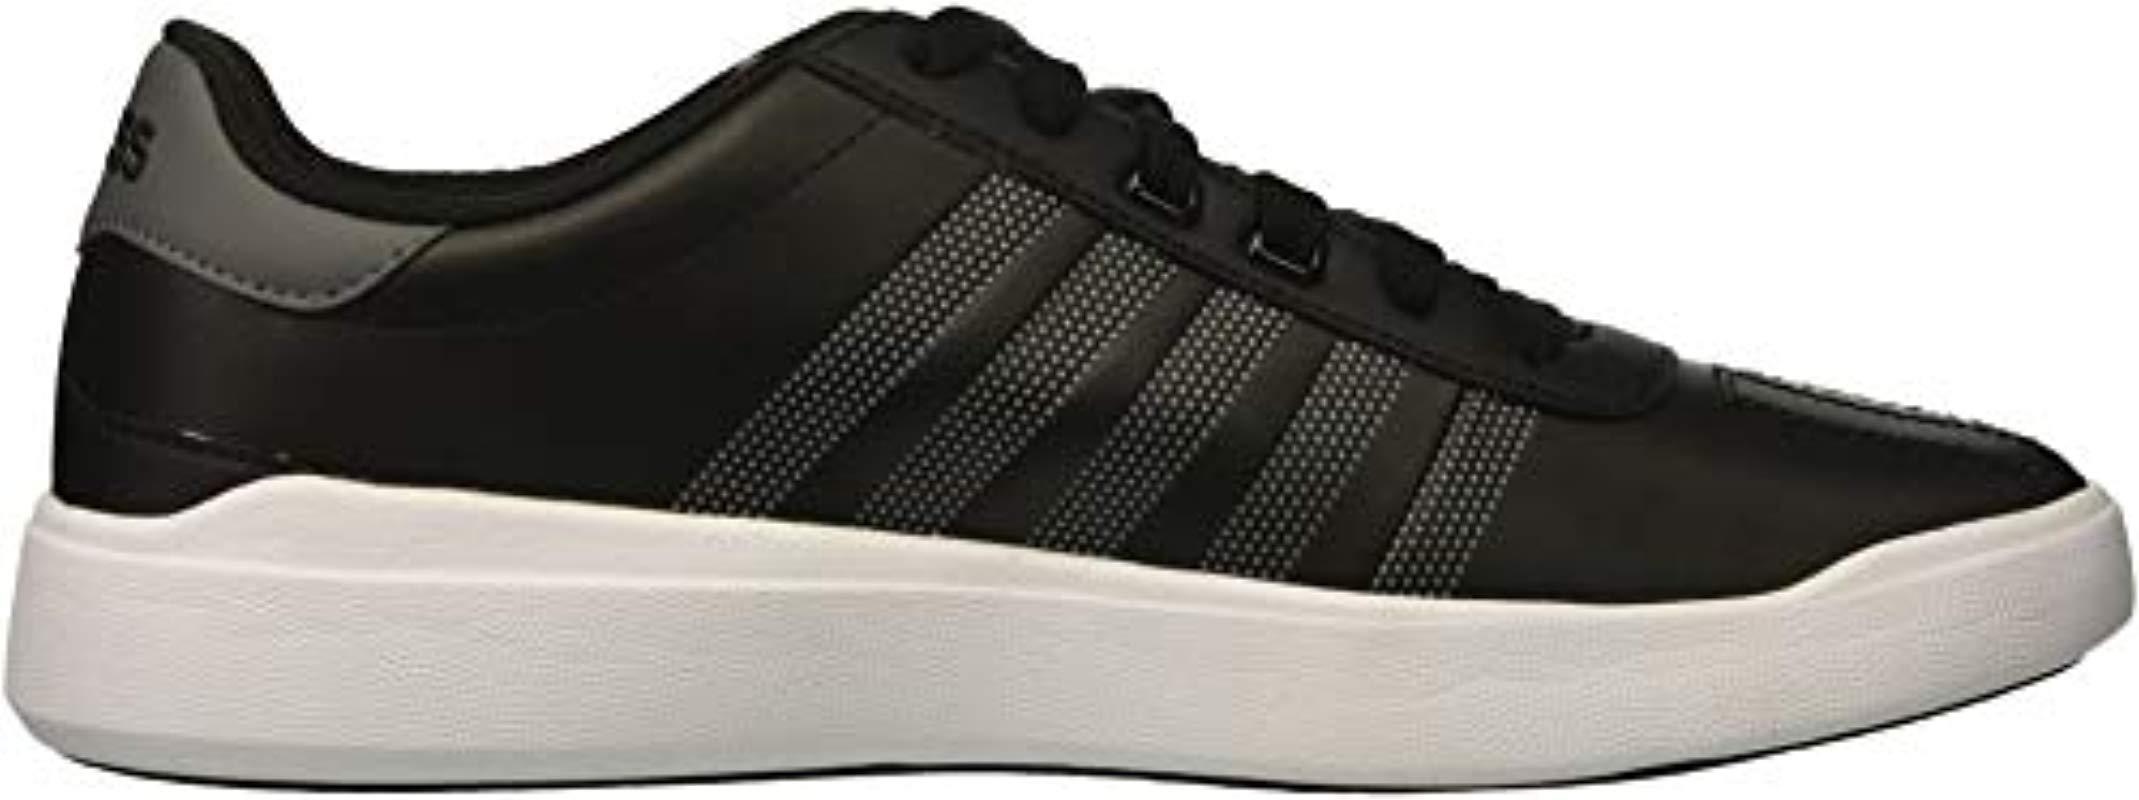 K-swiss Heritage Light L Sneaker in Black/Charcoal/White (Black) - Lyst